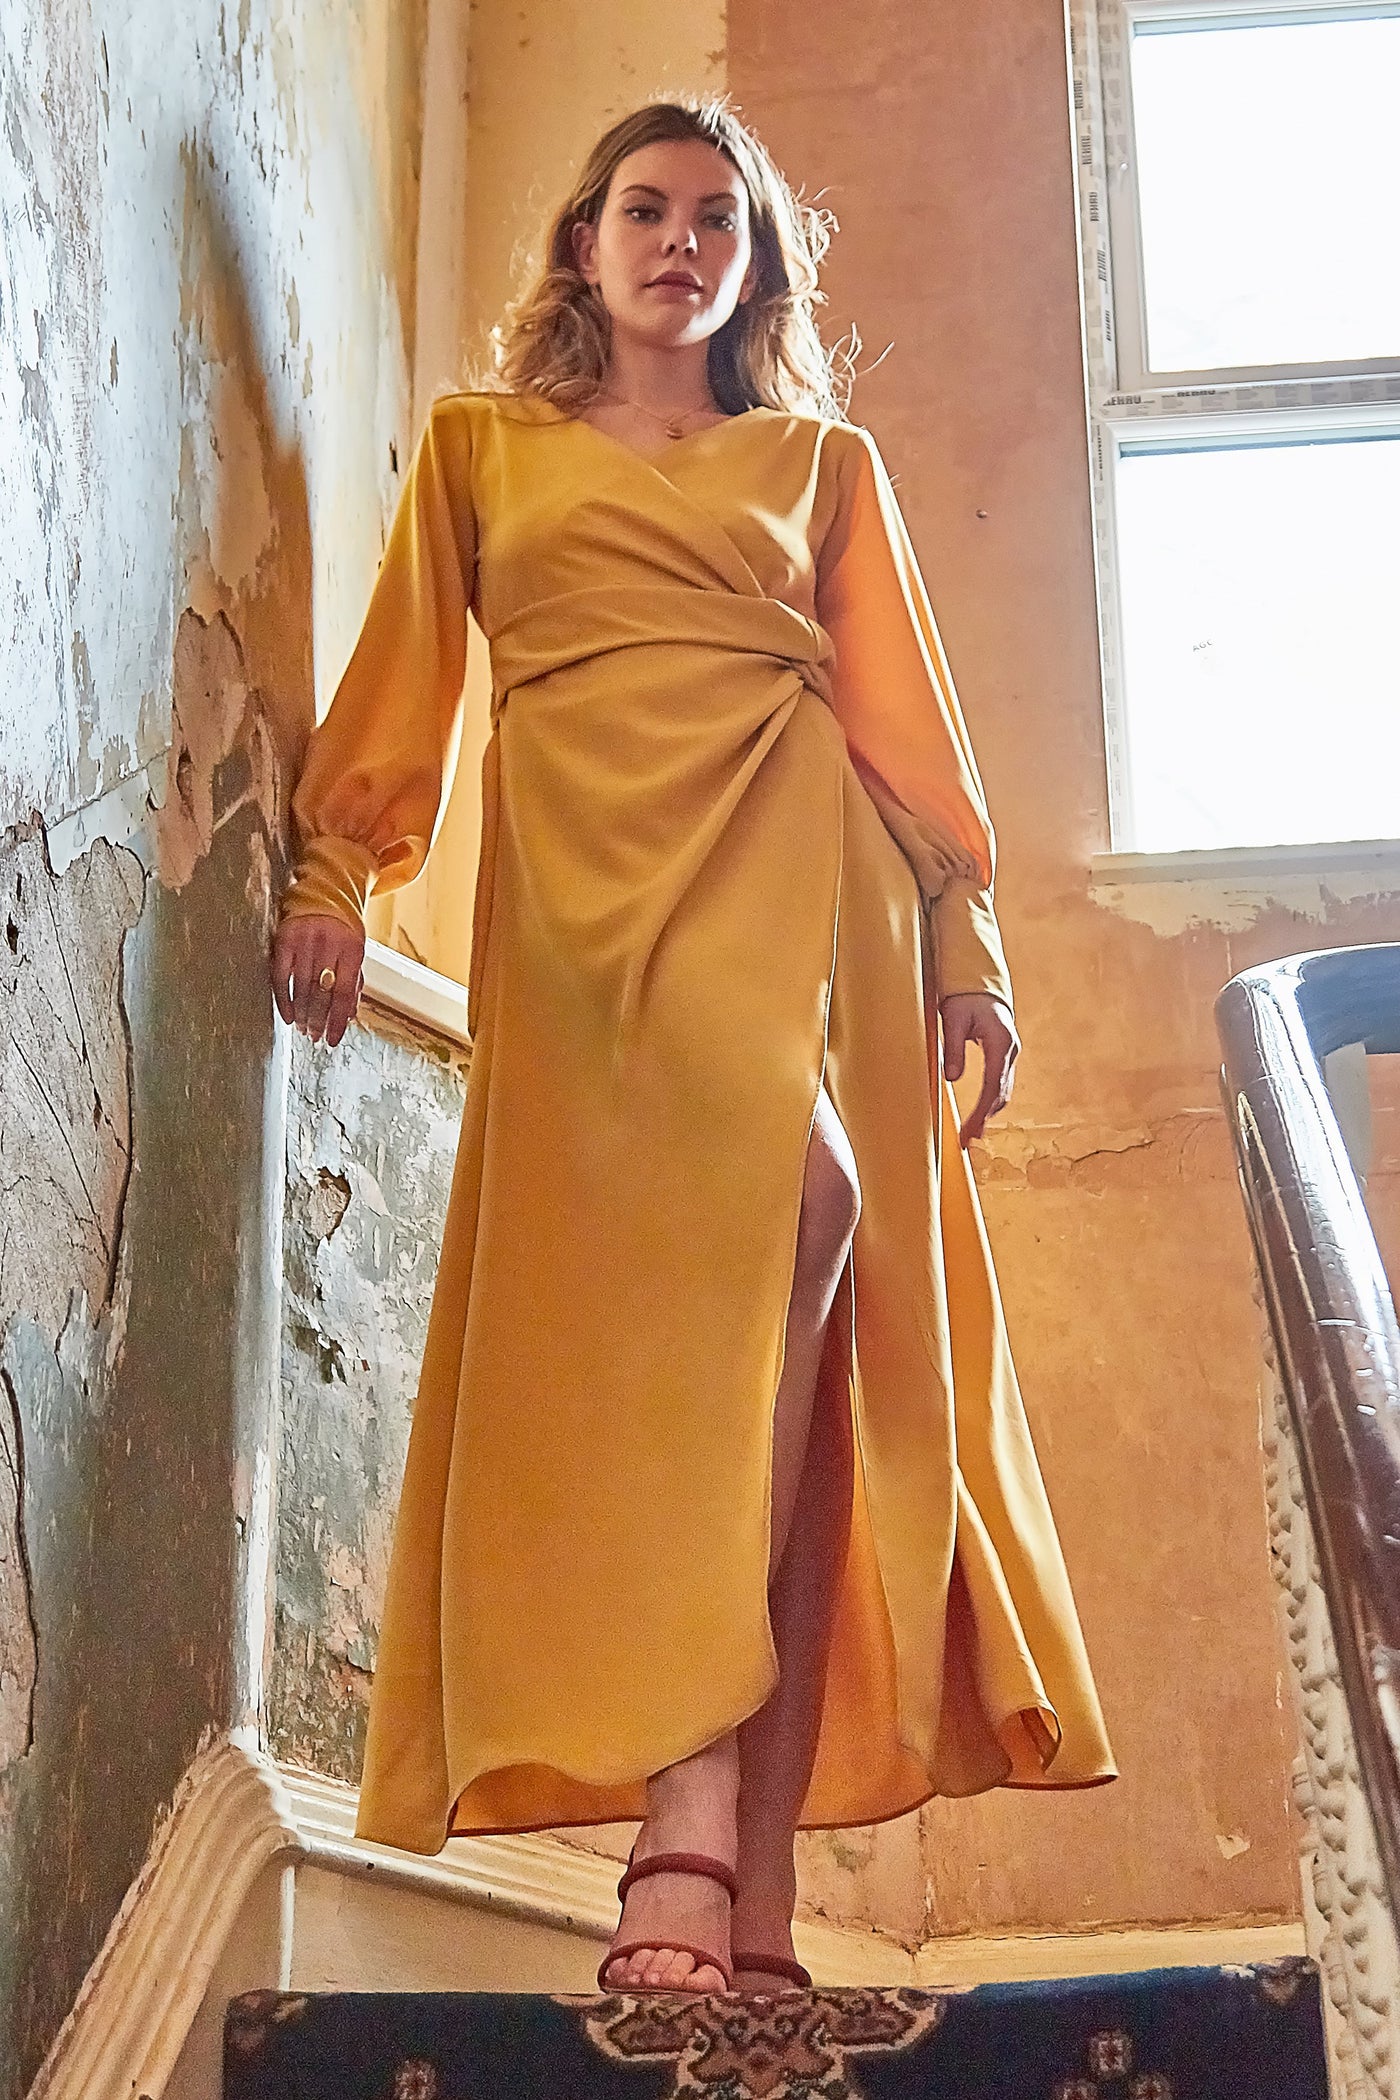 Amber - Mustard Wrap Dress